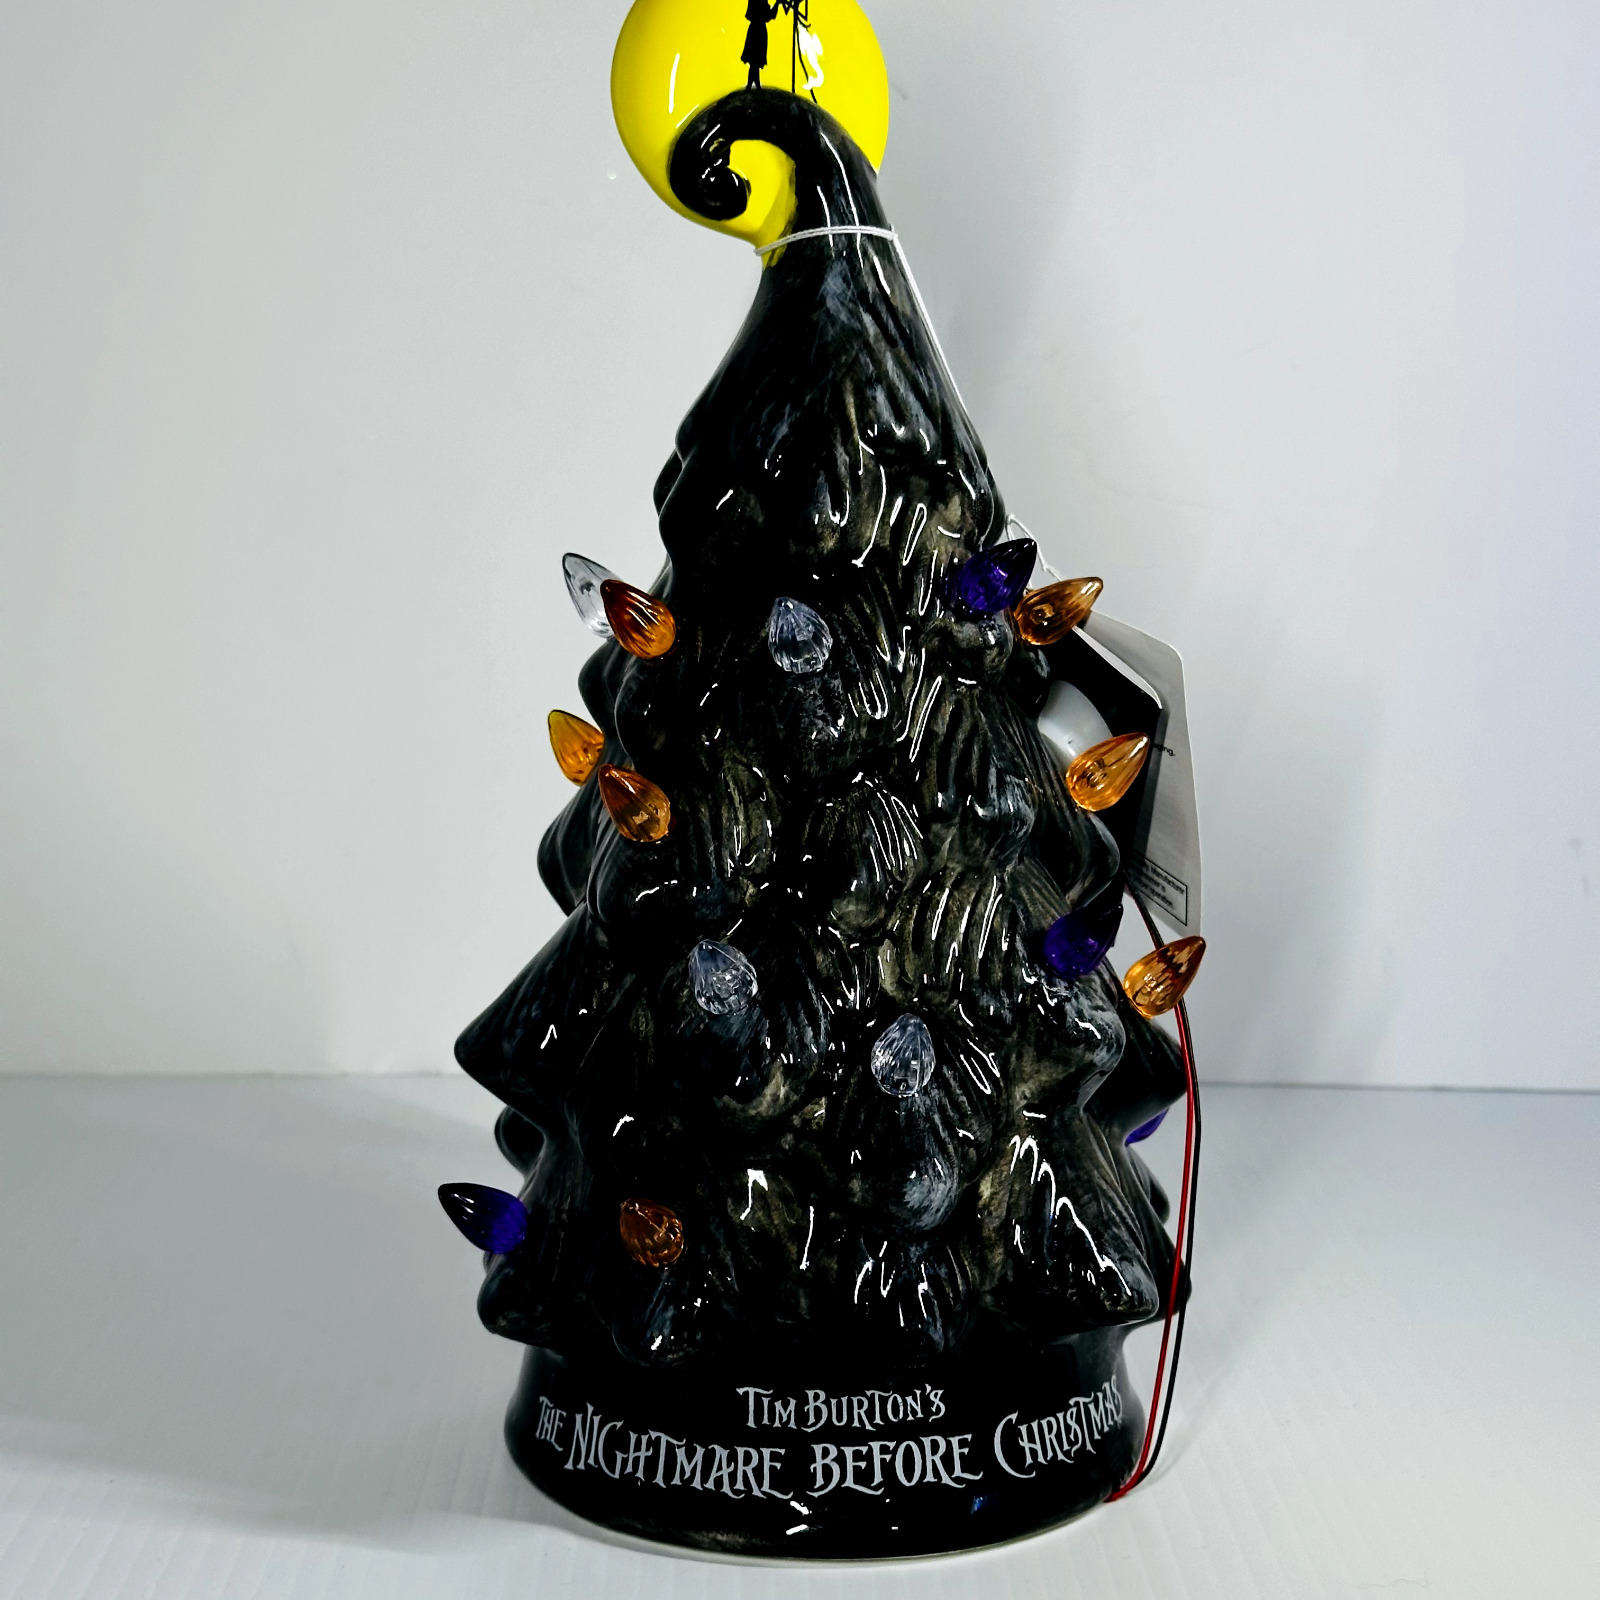 Tim Burtons The Nightmare Before Christmas Black Ceramic Halloween Light Up Tree